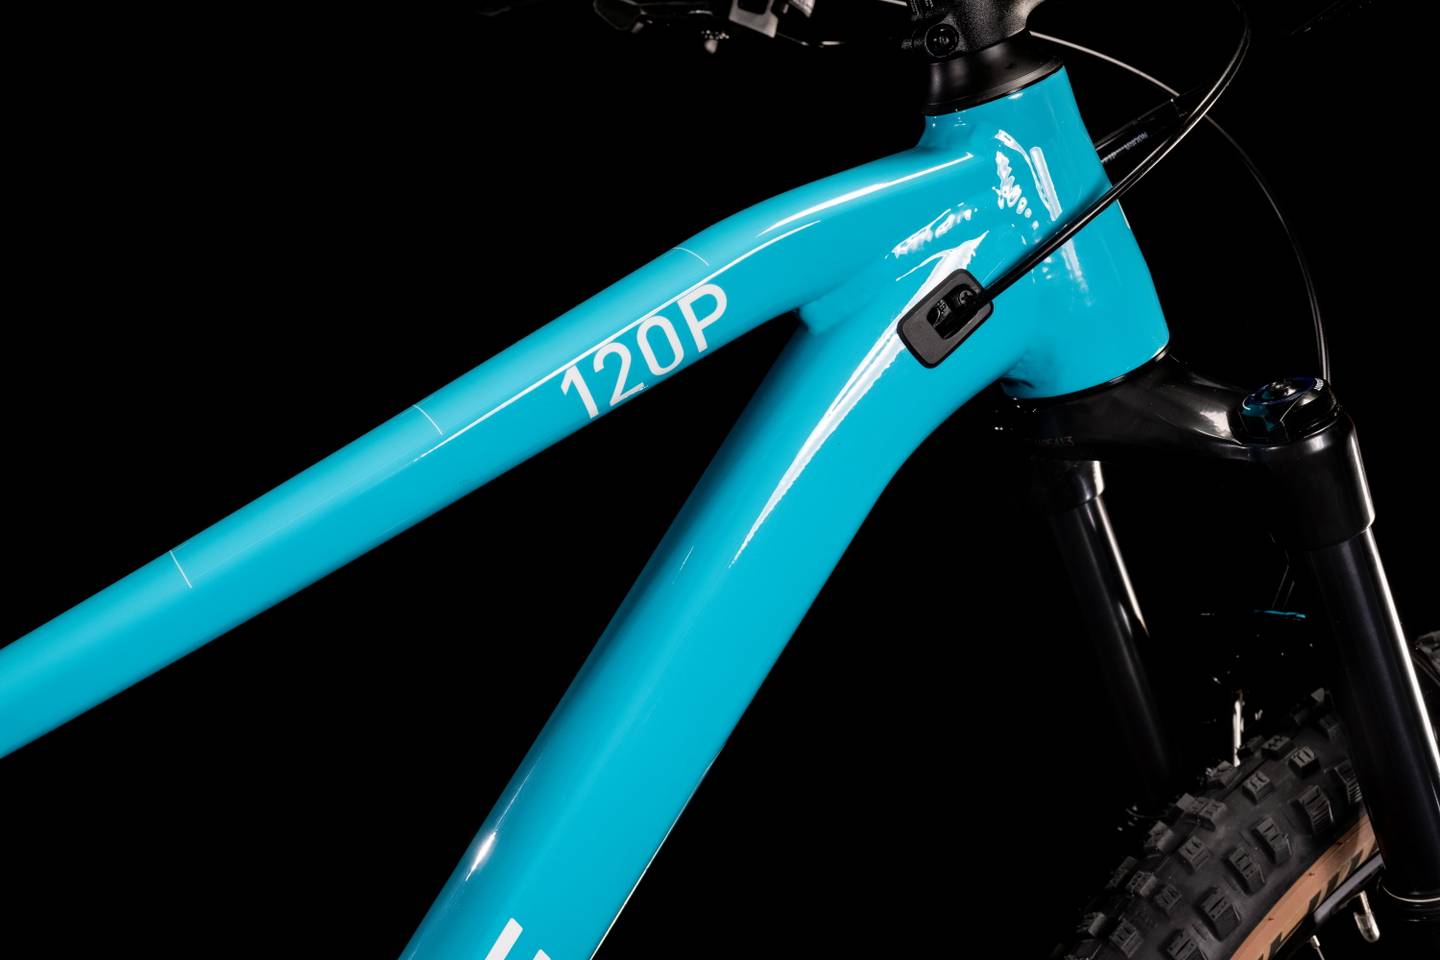 Bicicleta Stereo 120 Pro 2022